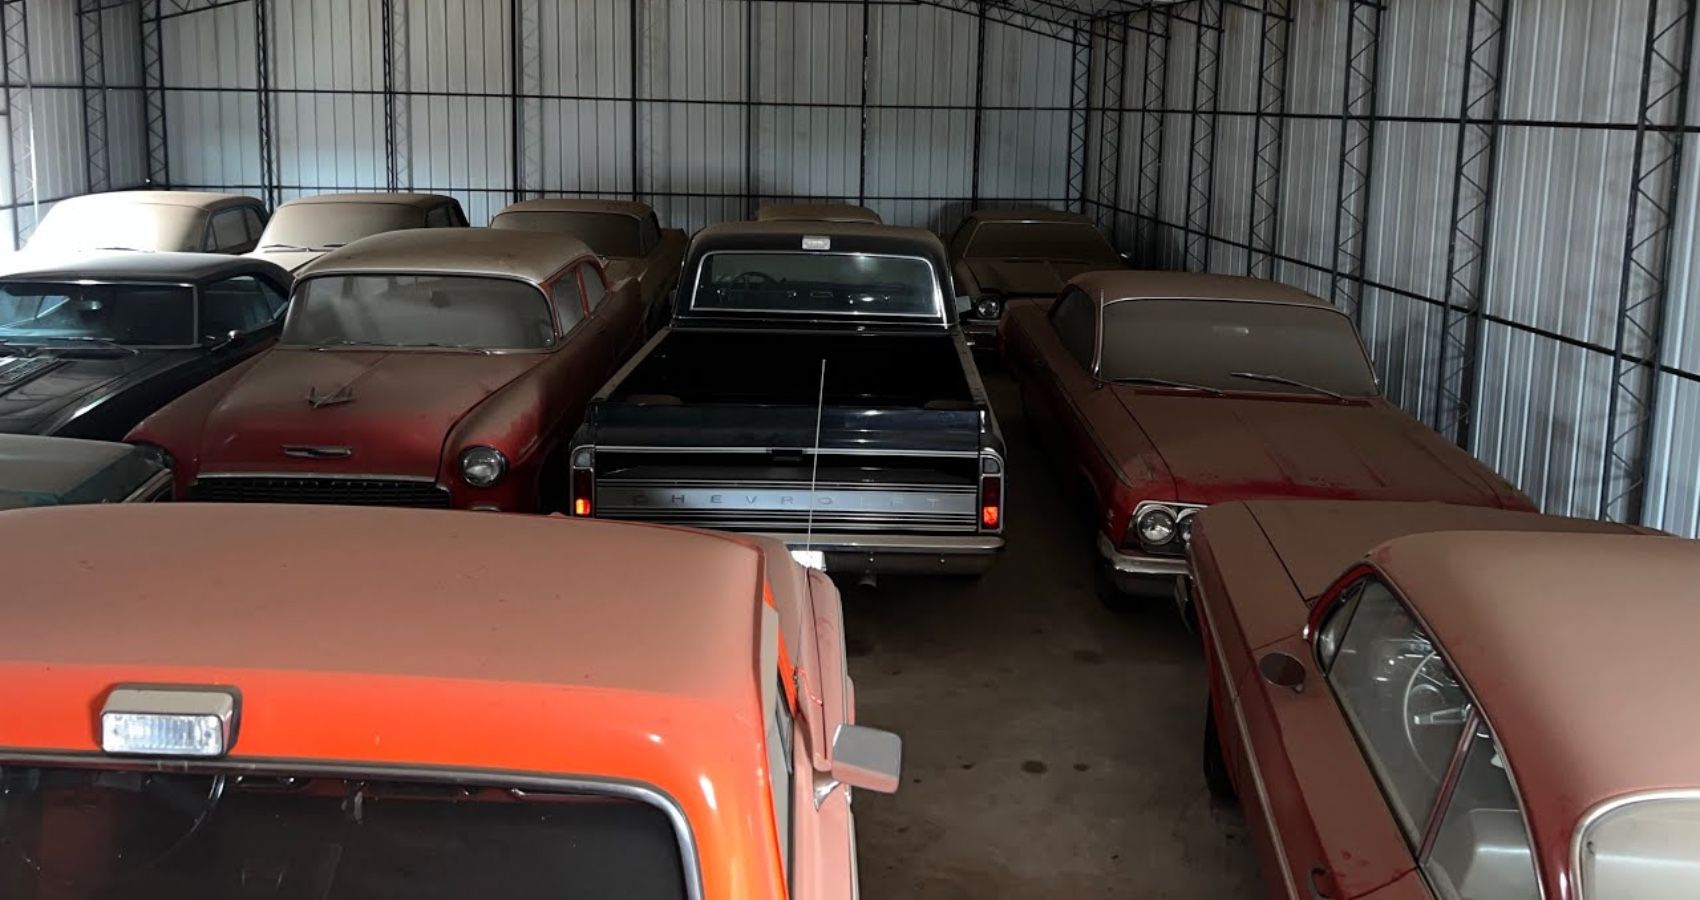 Chevrolet Cars Barn Find Oklahoma